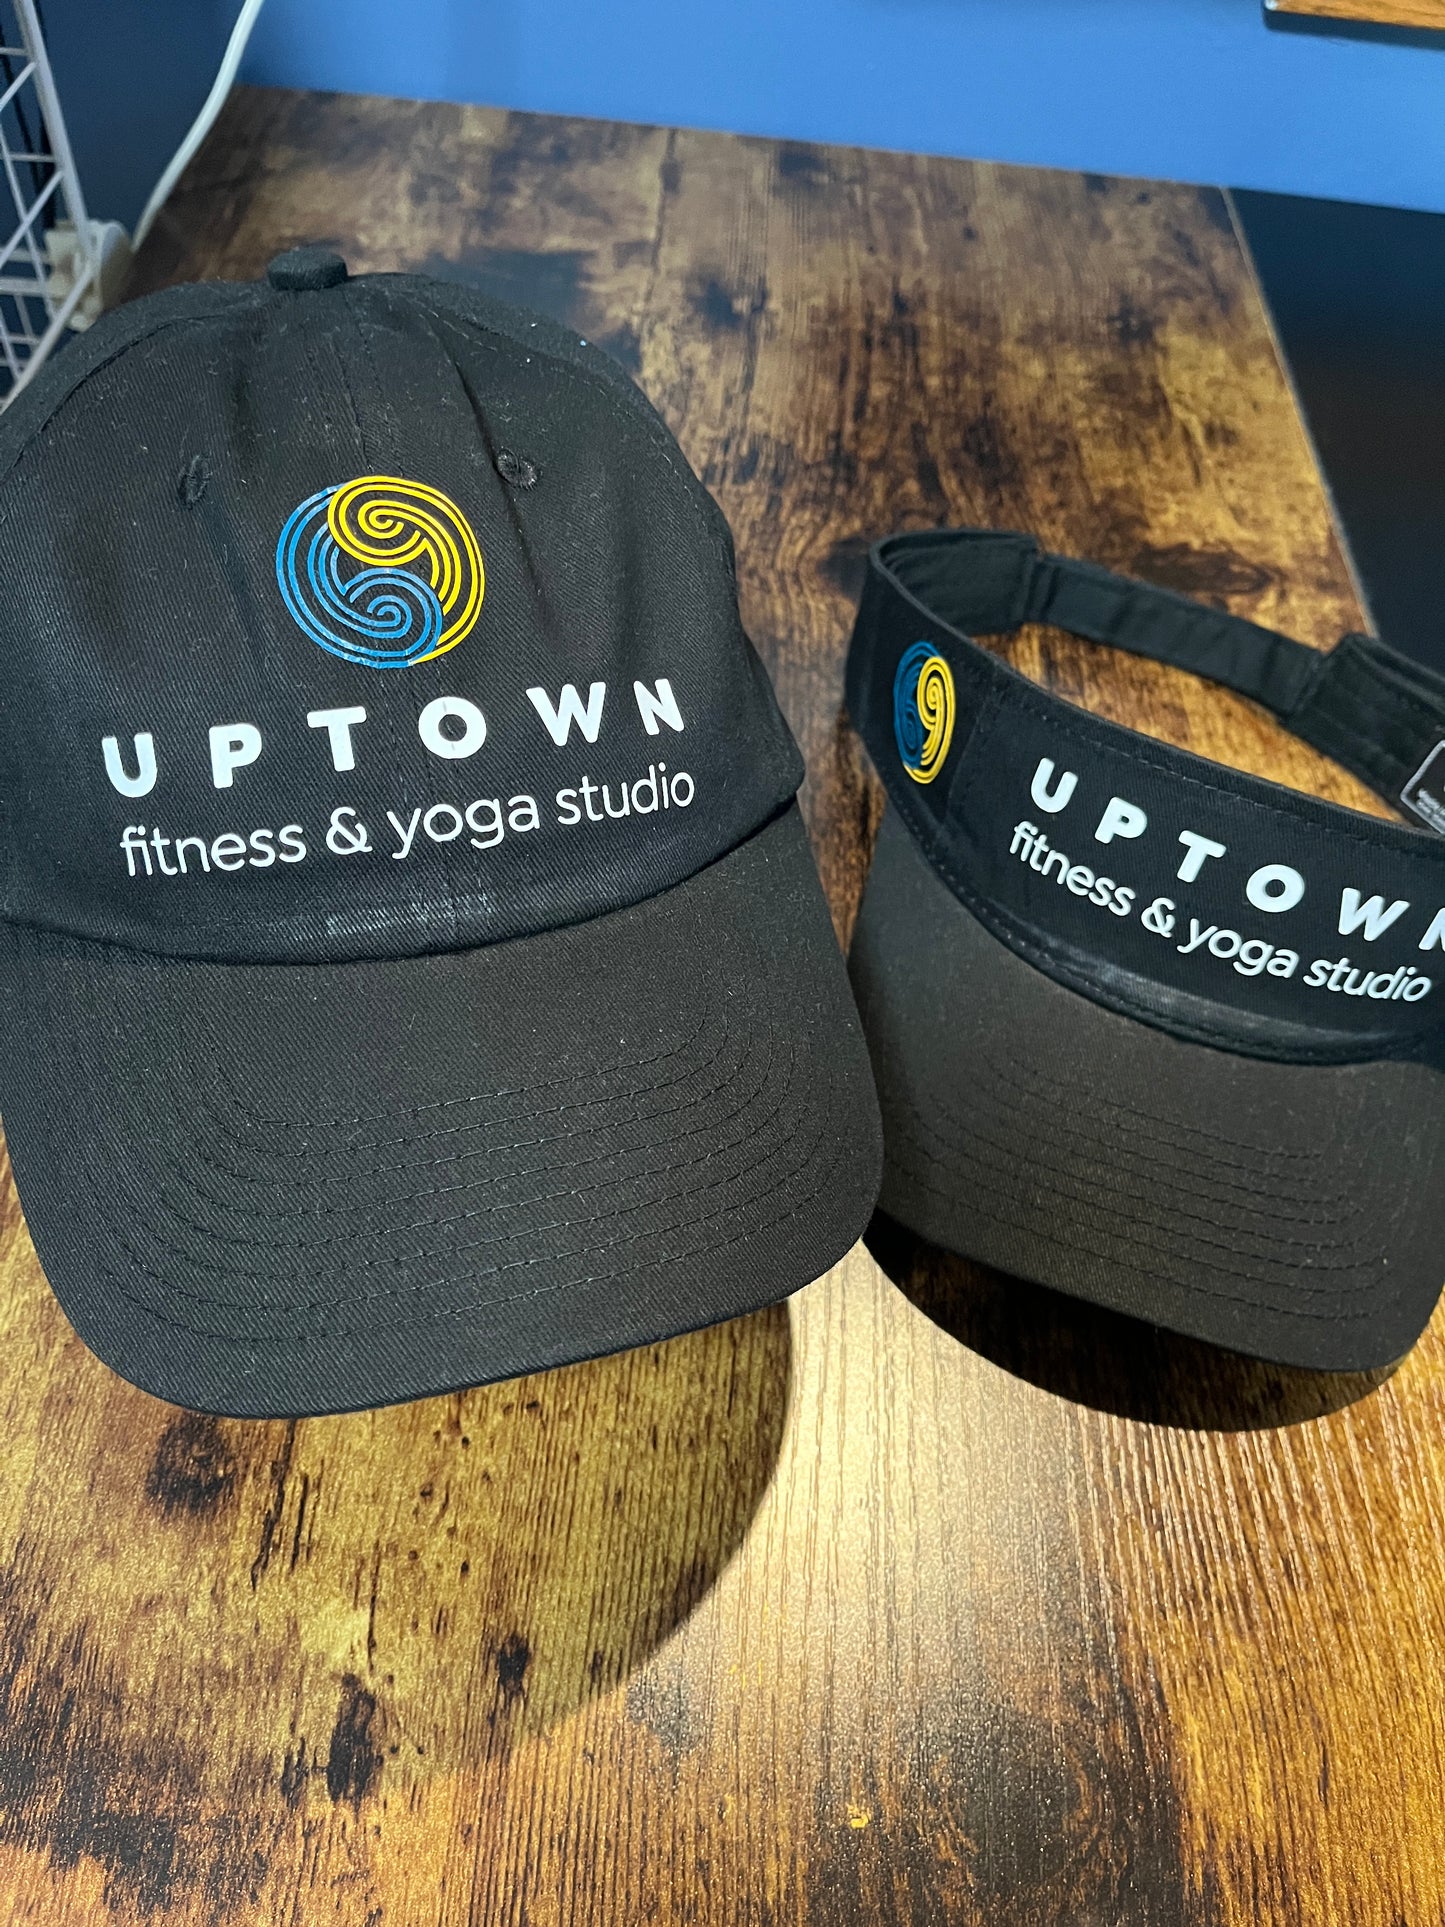 Uptown Fitness & Yoga ball cap